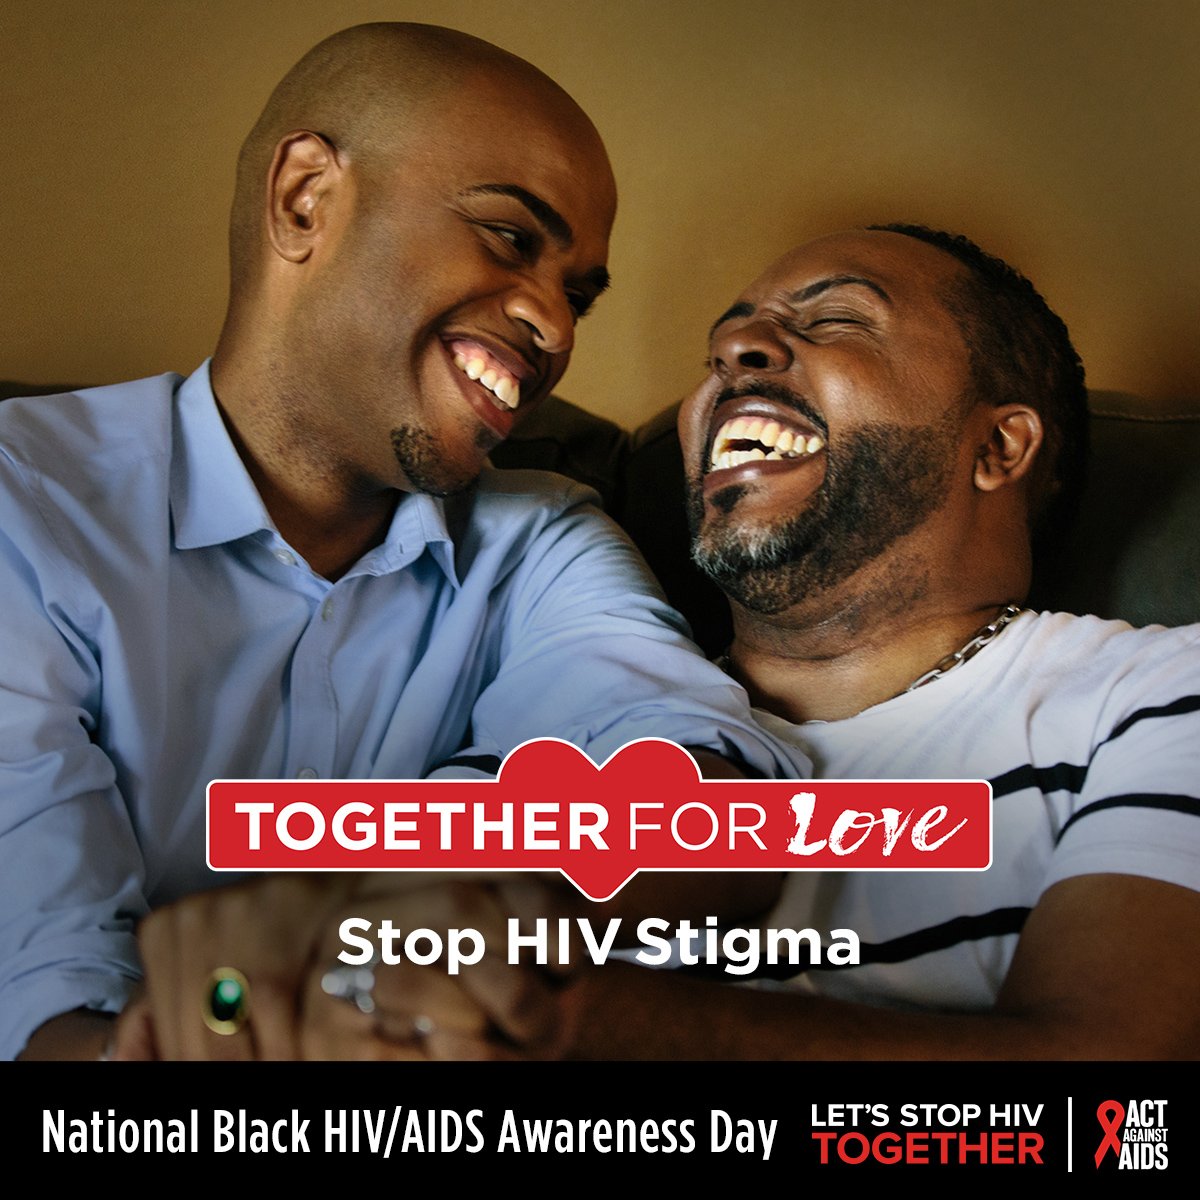 National Black HIV/AIDS Awareness Day